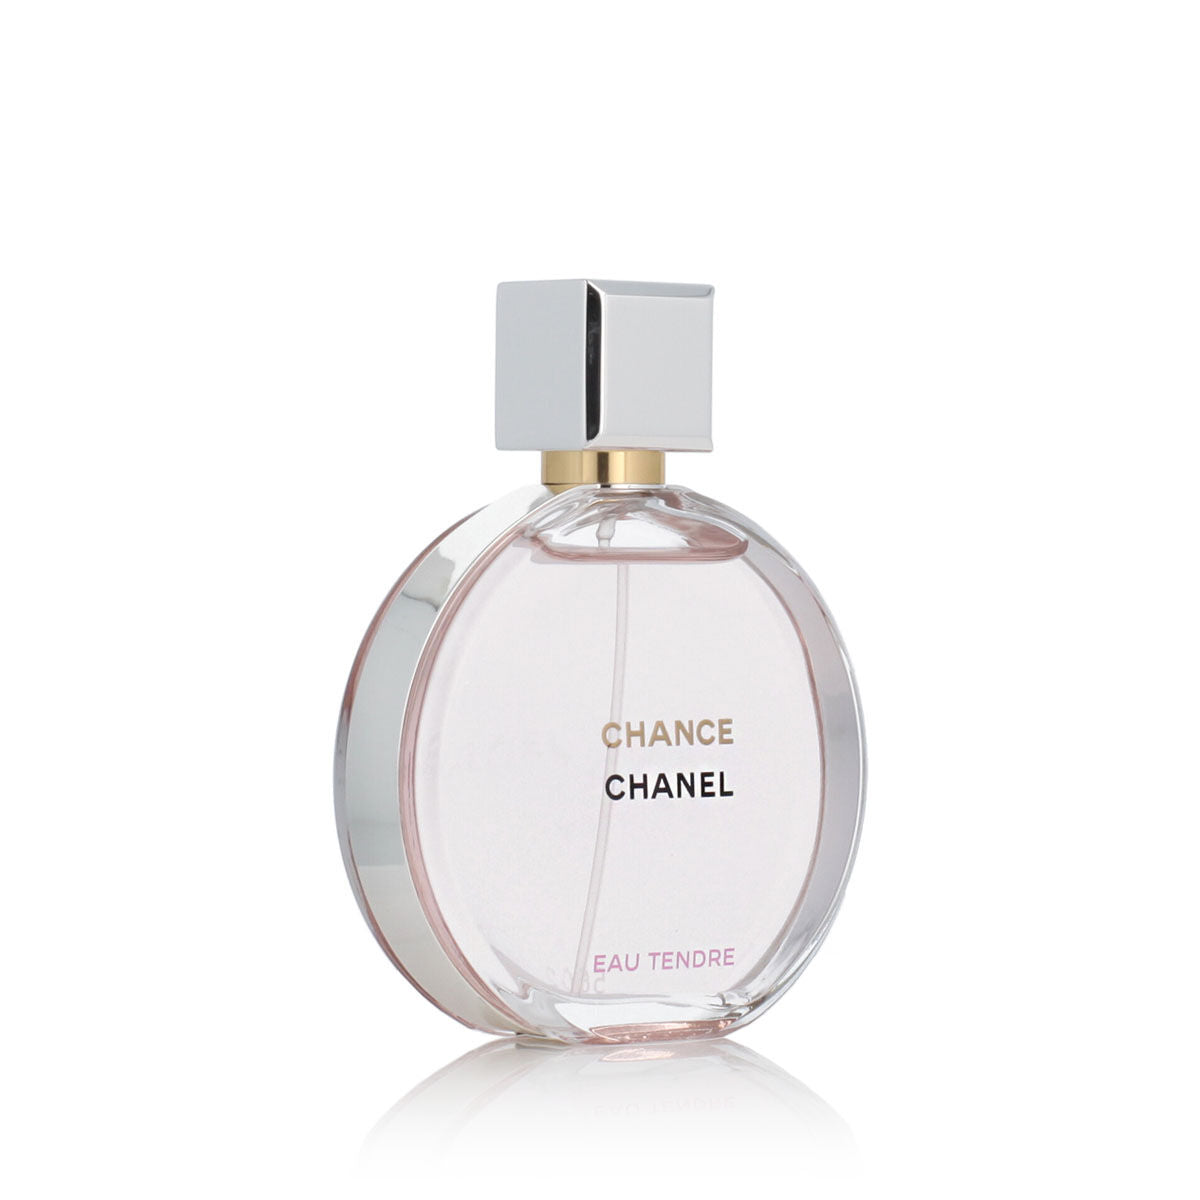 Perfume Chance Eau Tendre Chanel Women 58 Ml Original Fragrance